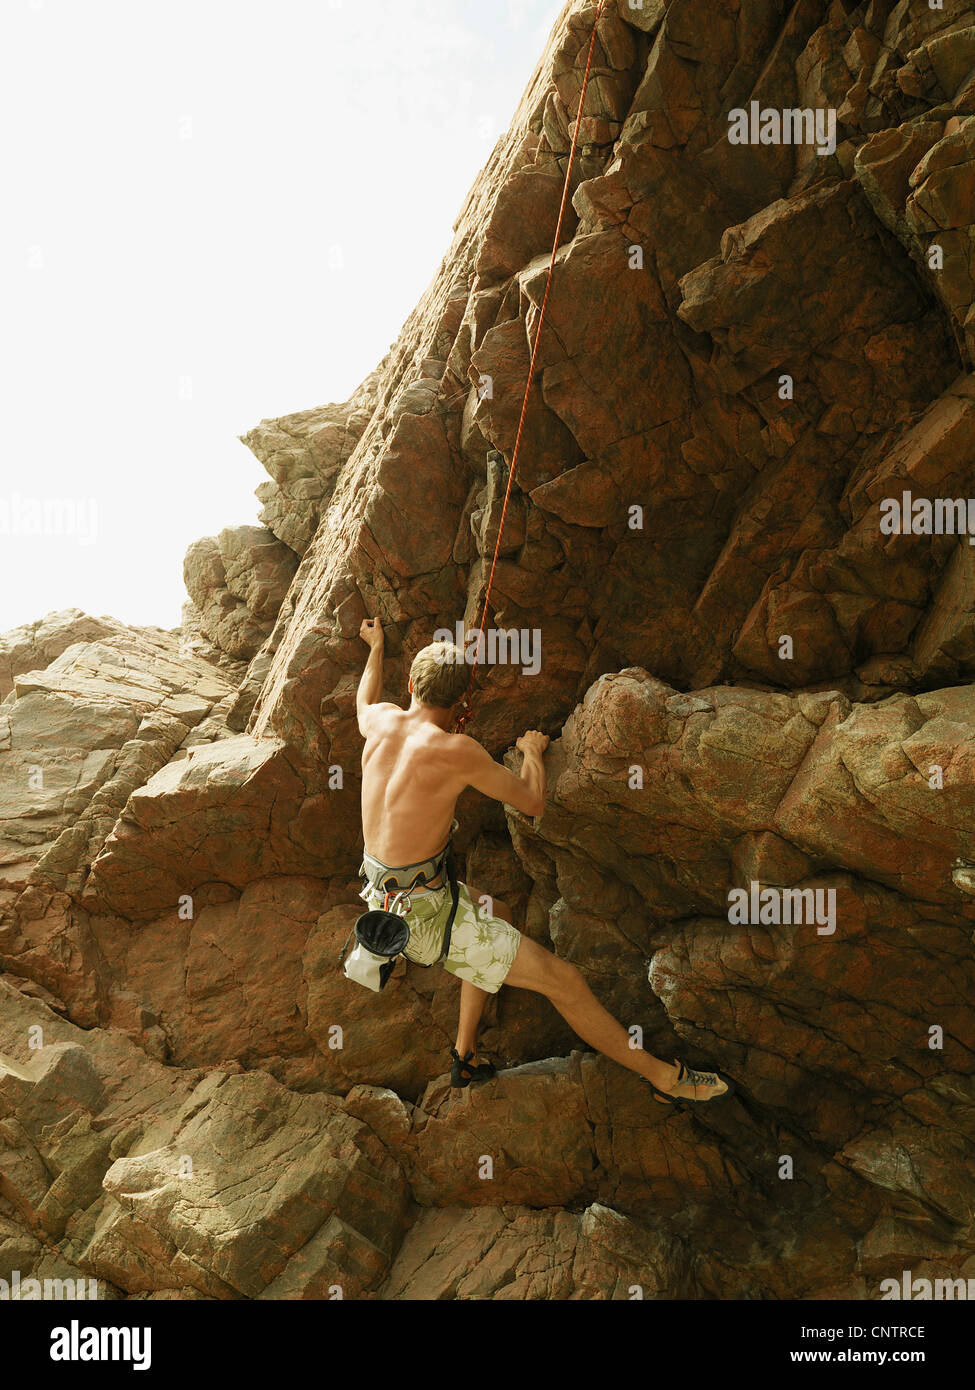 Kletterer, die steile Felswand Skalierung Stockfoto